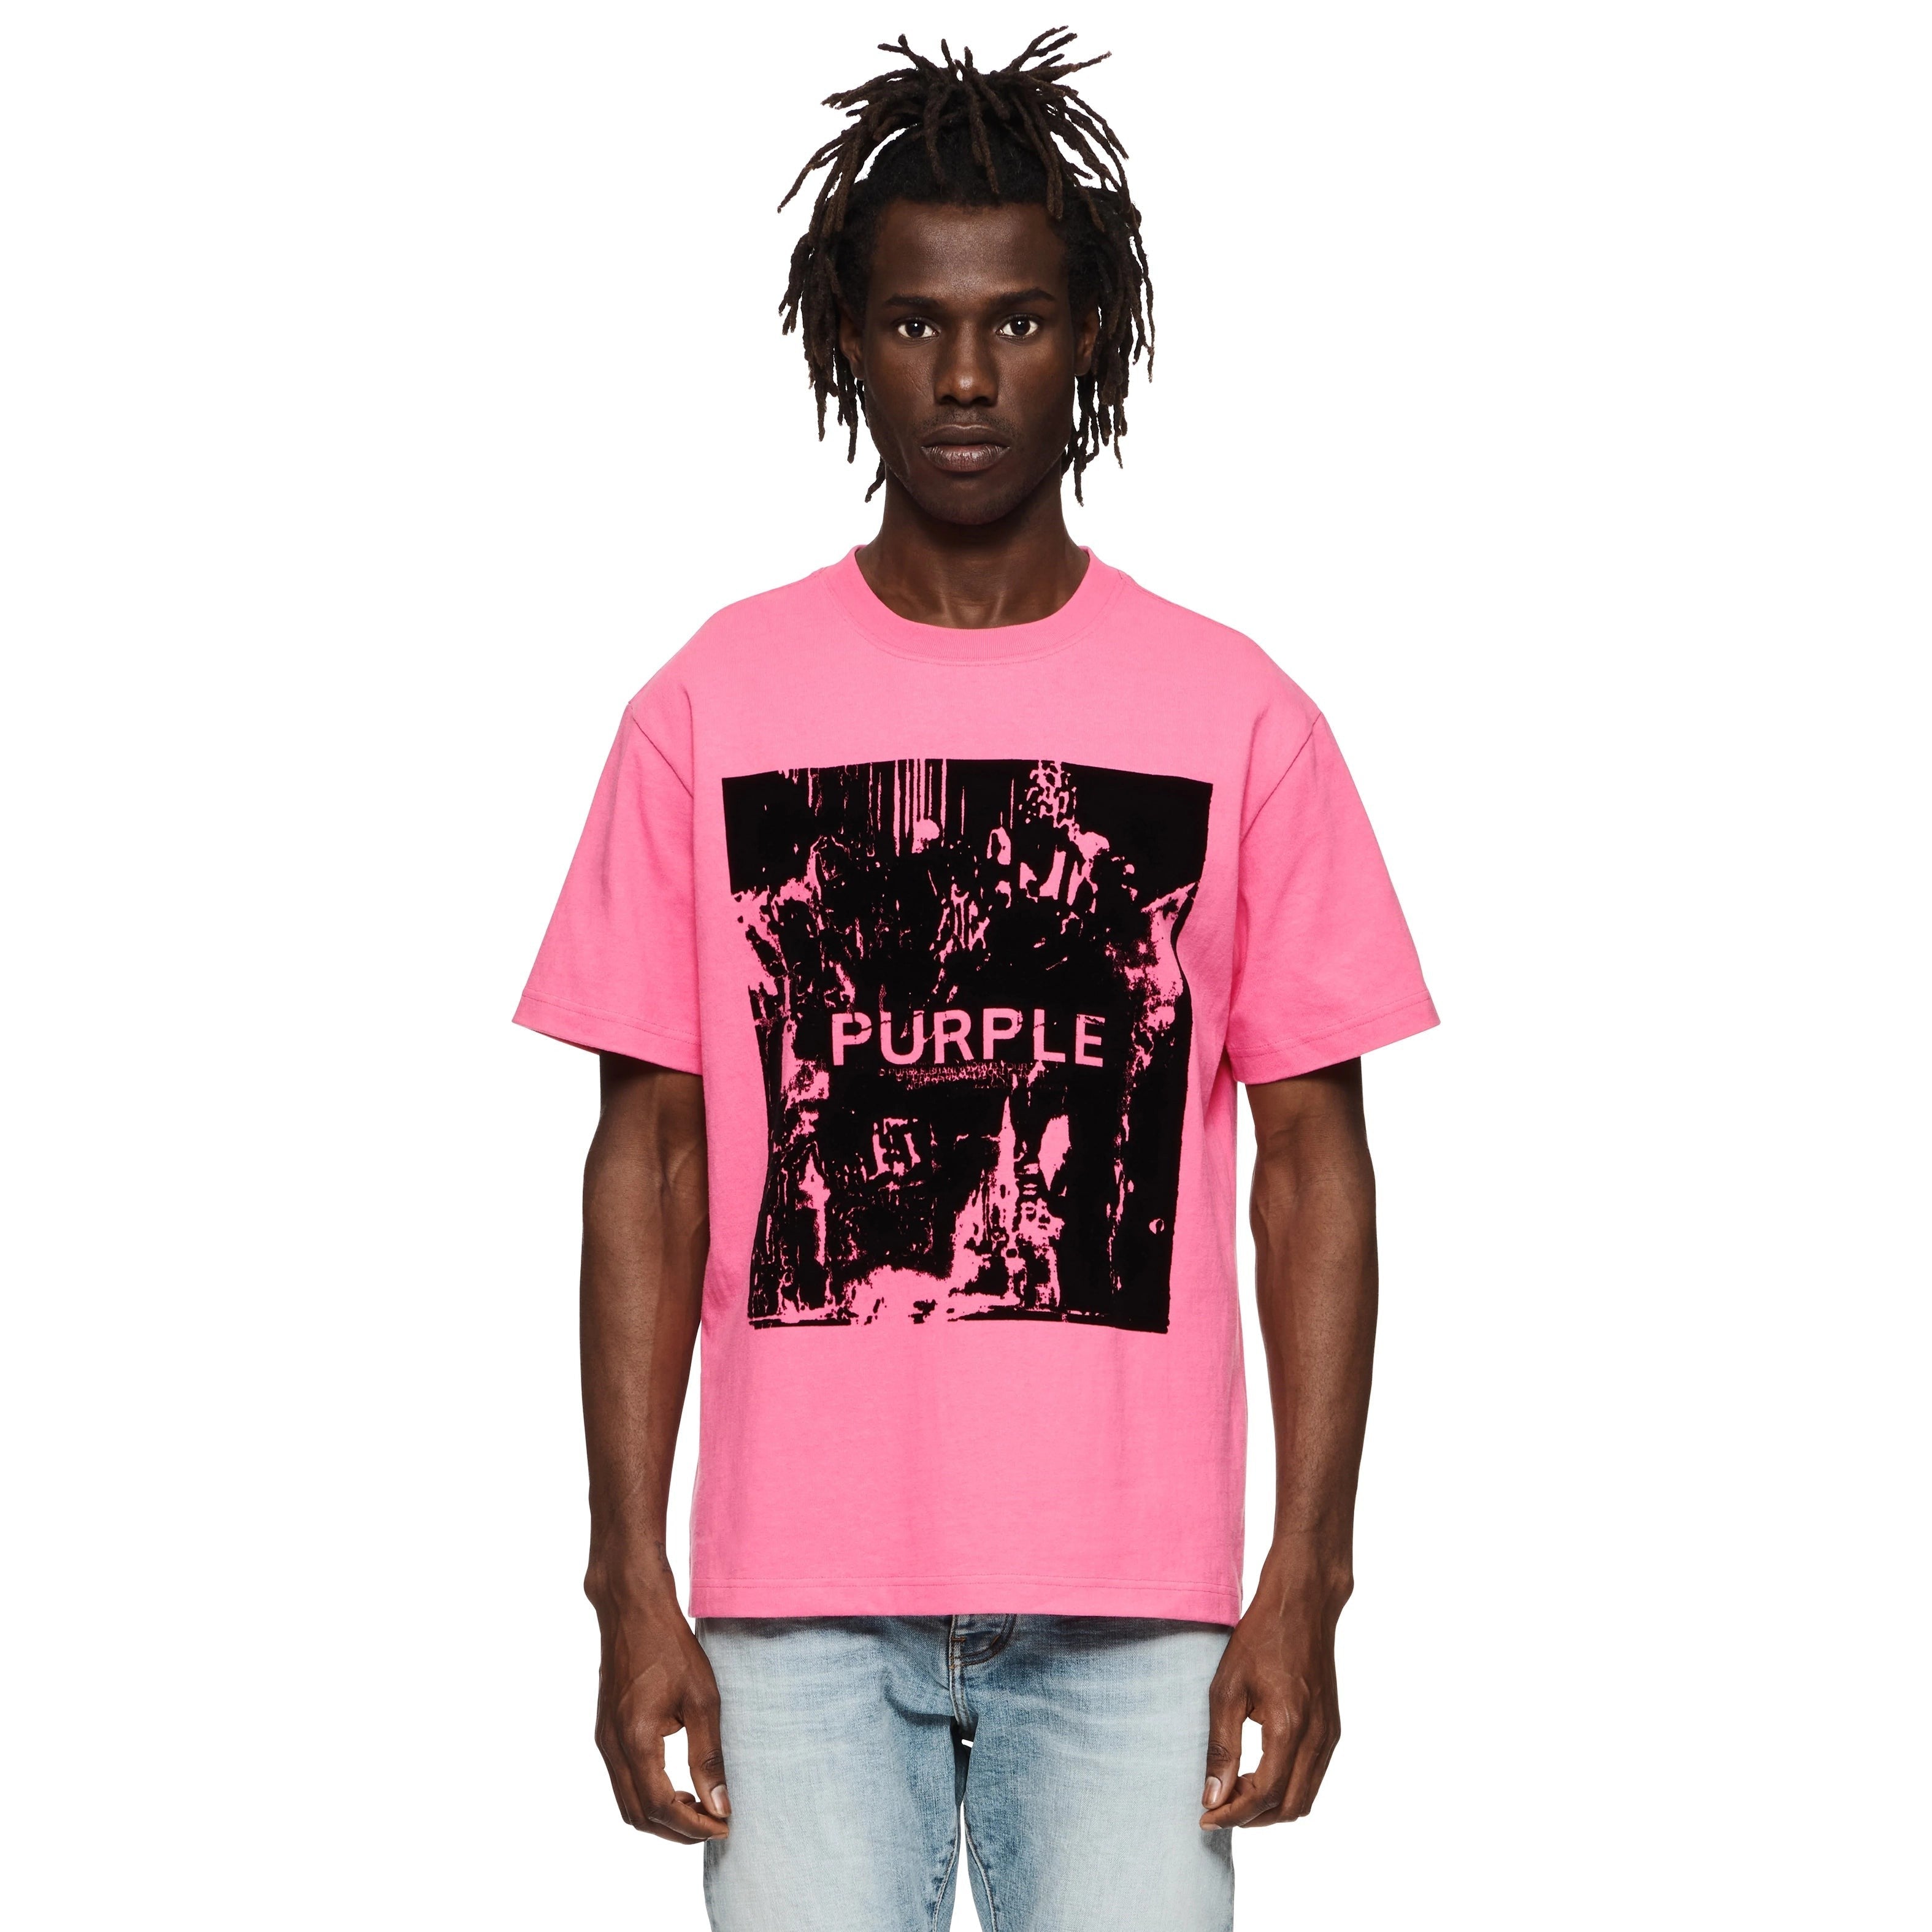 Mens - Fusion Flock Tee Playback Brand Purple Neon T-Shirt Pink Metro -